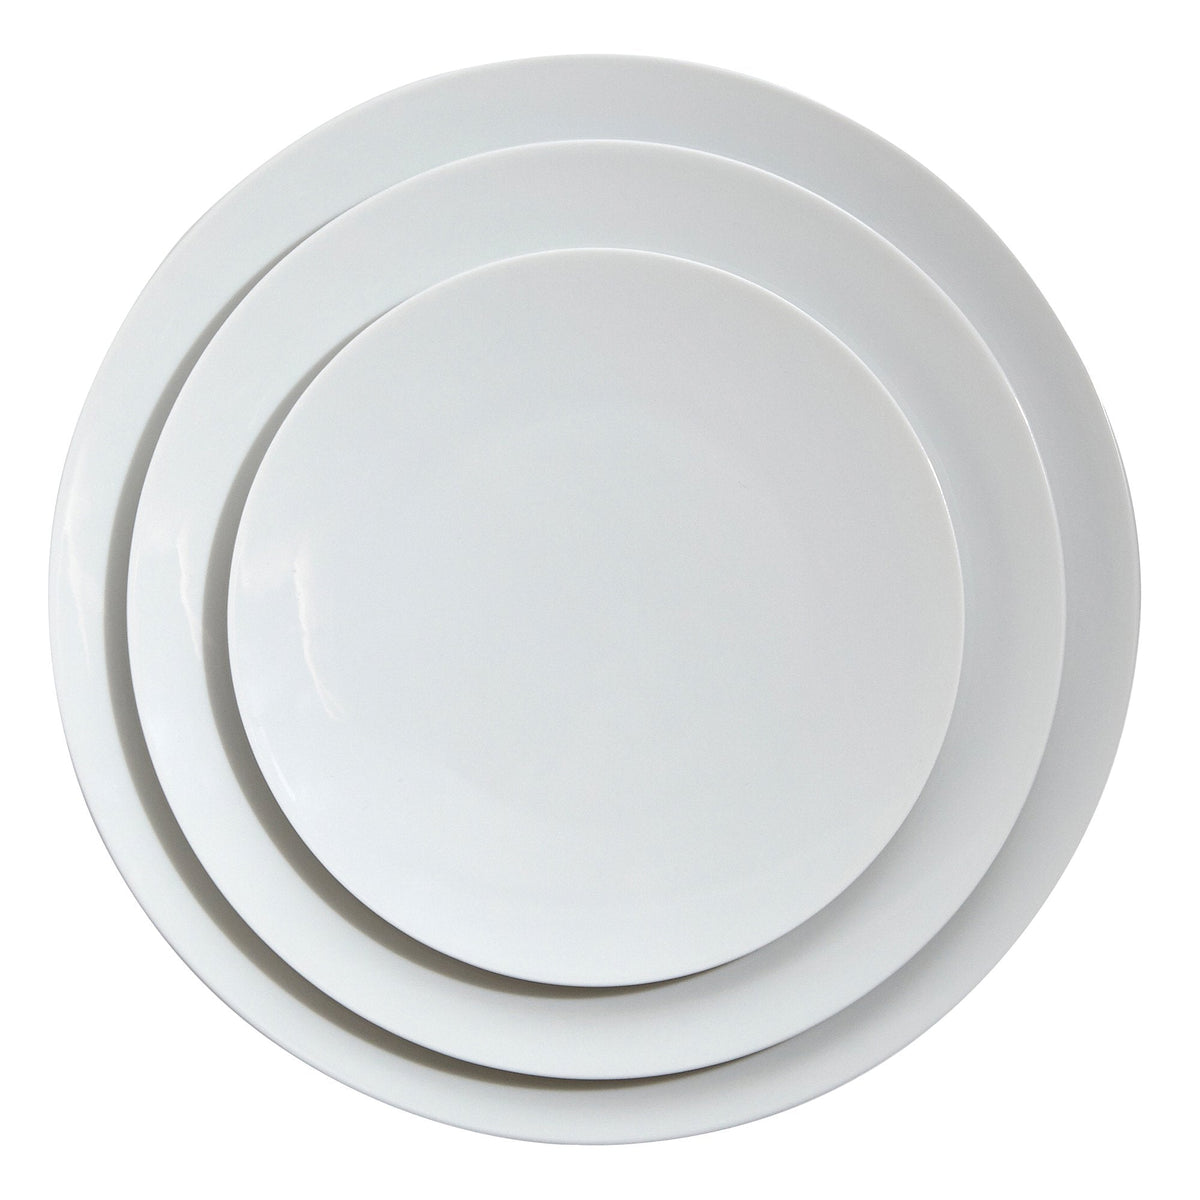 TAC 02 Dinner Plate